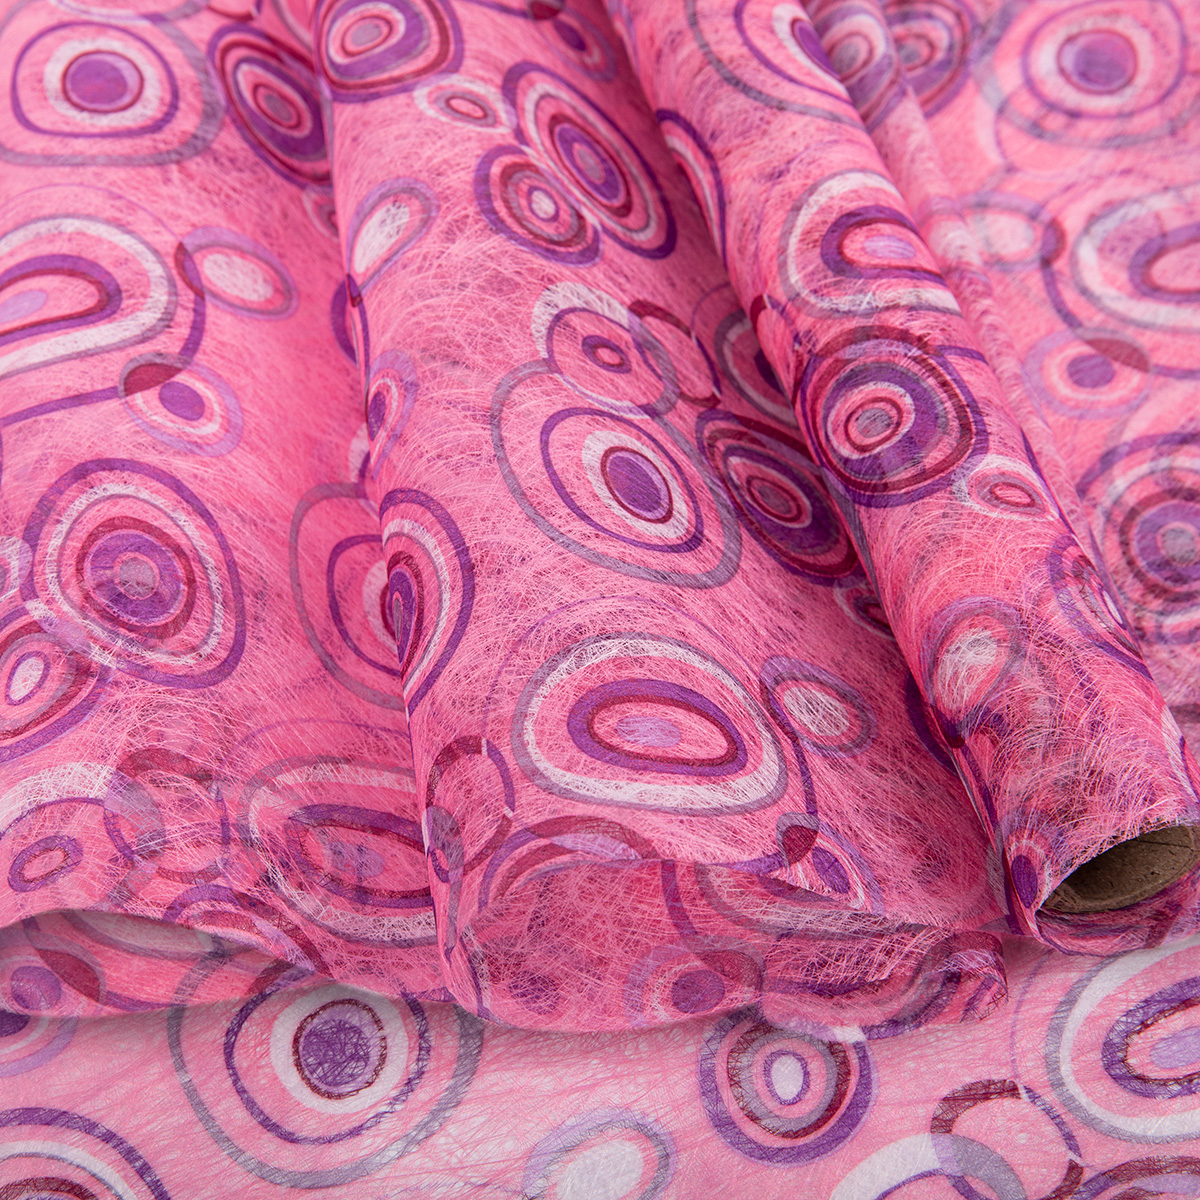 Blumentag PNW-35 Флористический фетр 35 г/кв.м 10 м 05 розовый (круги) Фото 1.